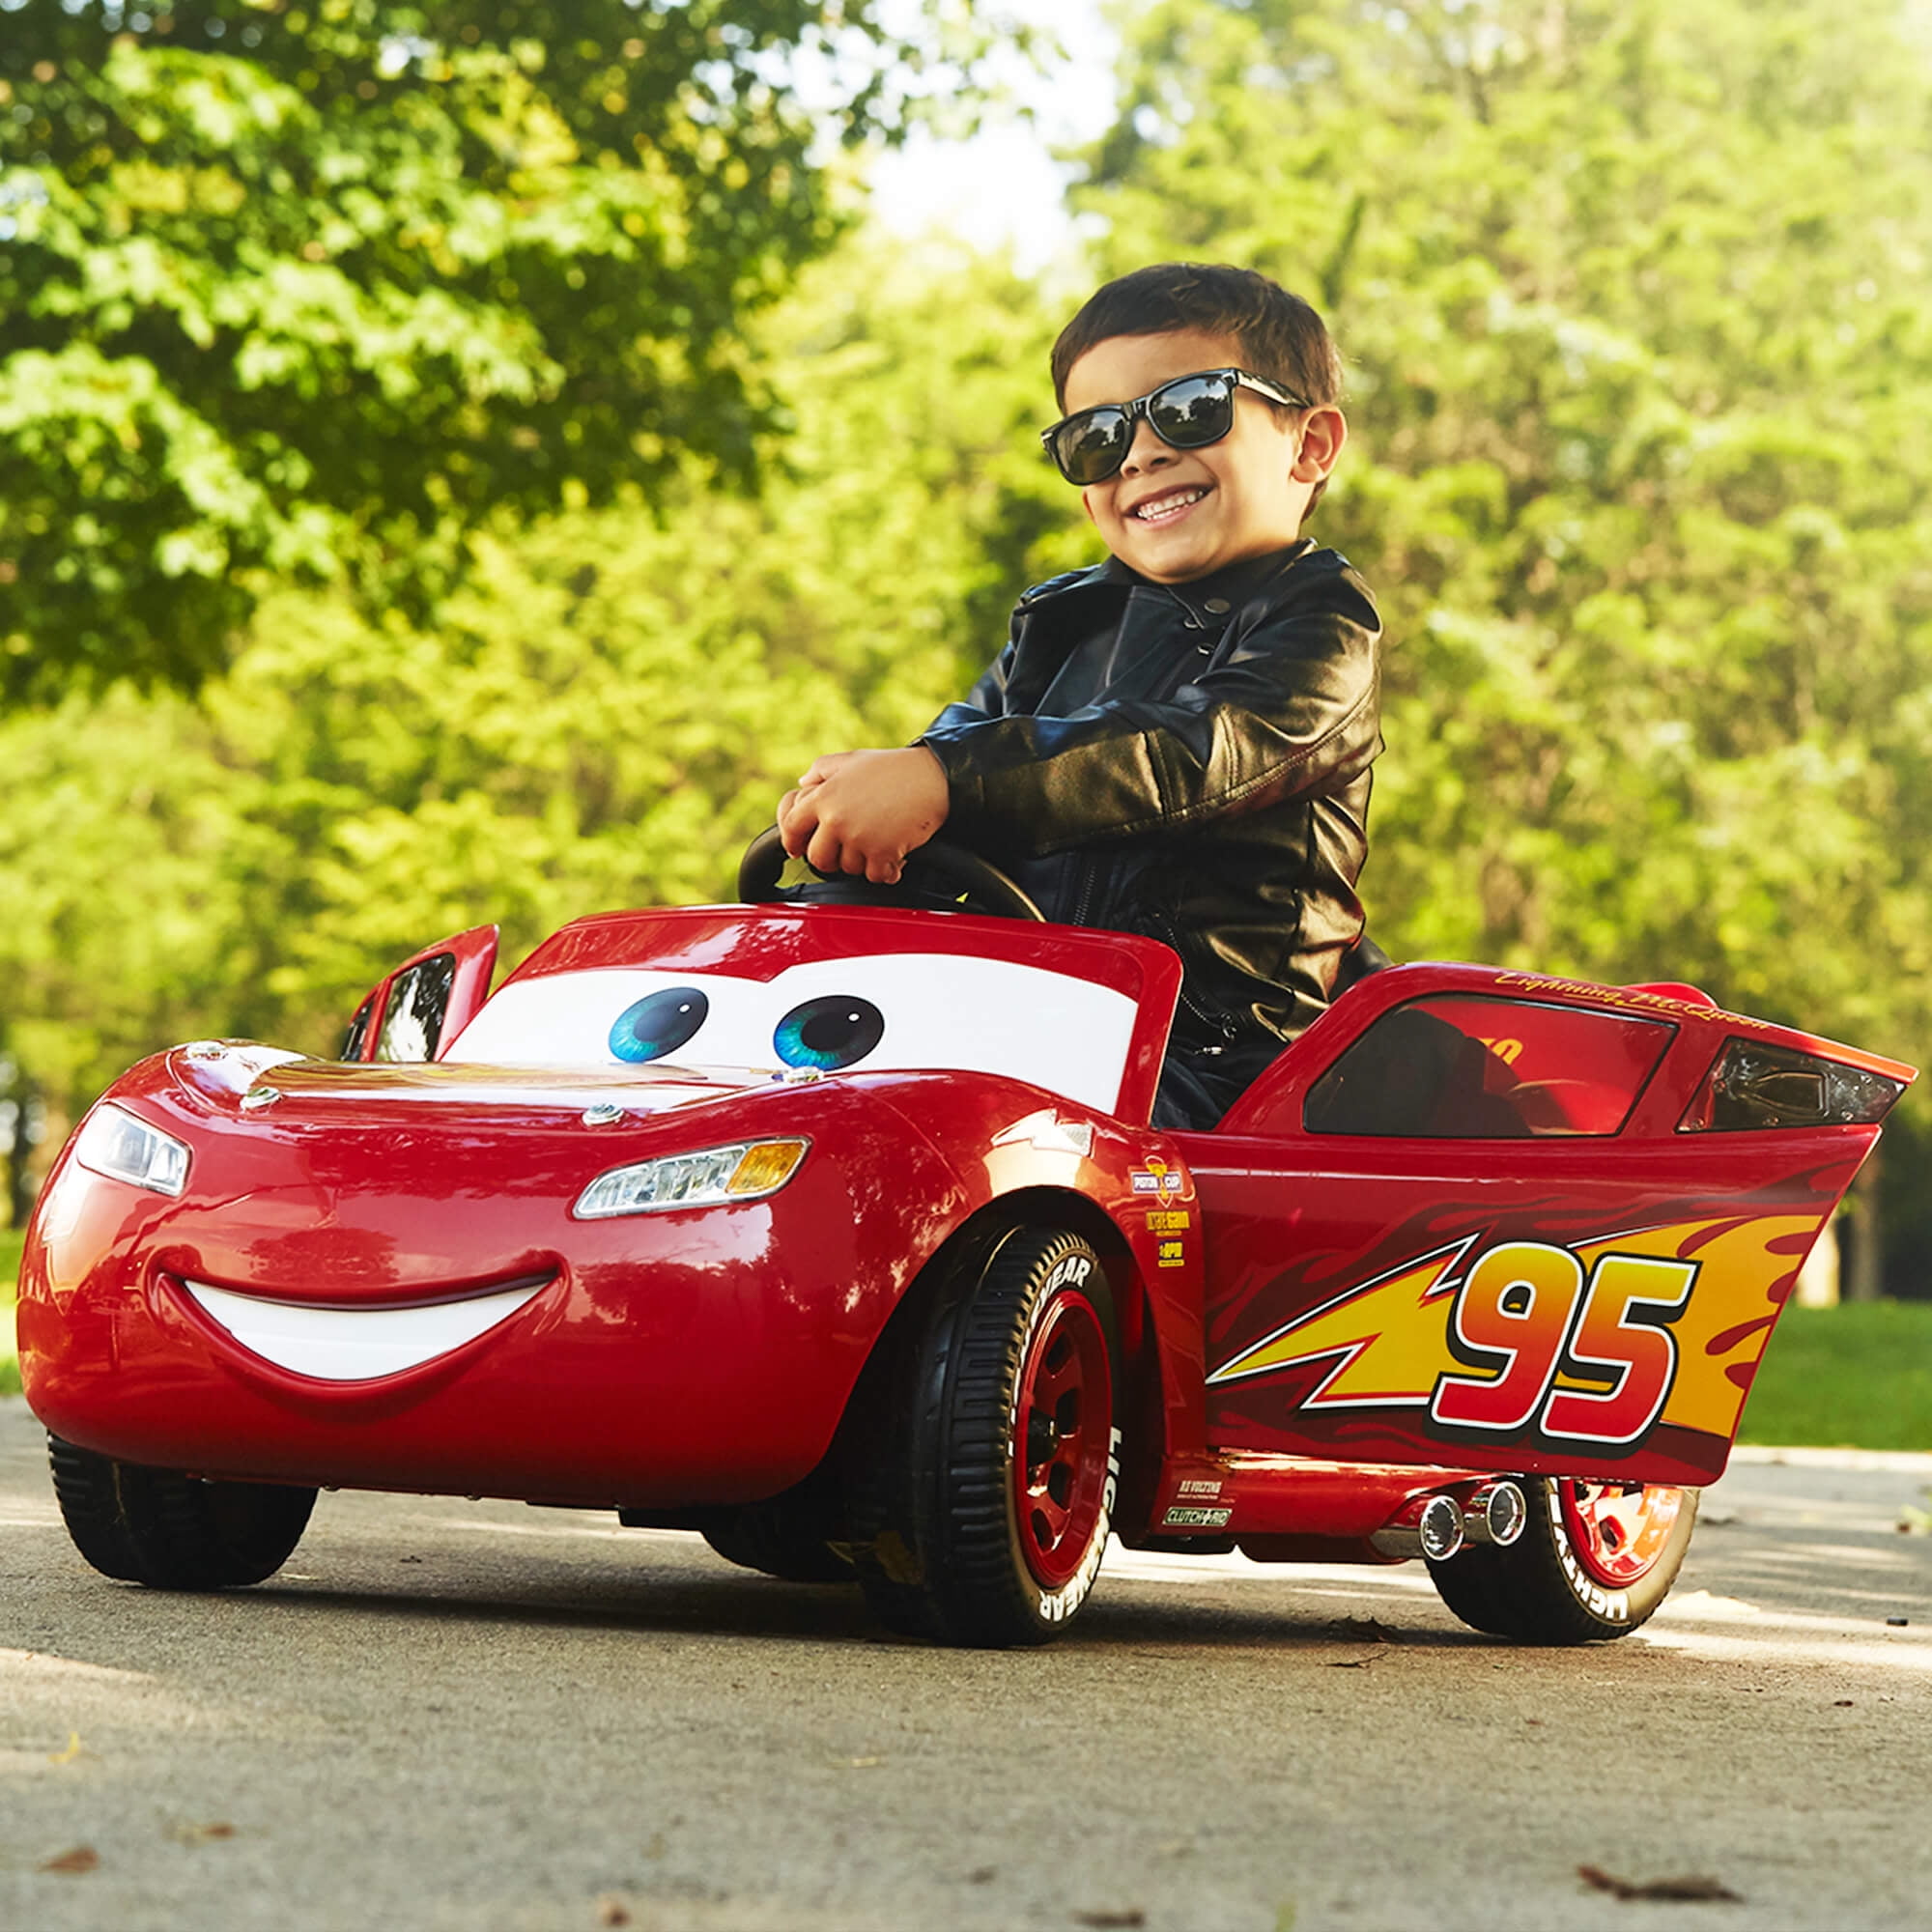 Huffy Disney Pixar Cars 3 Lightning McQueen 6V Battery-Powered Ride on, for  Children Ages 3+ years 